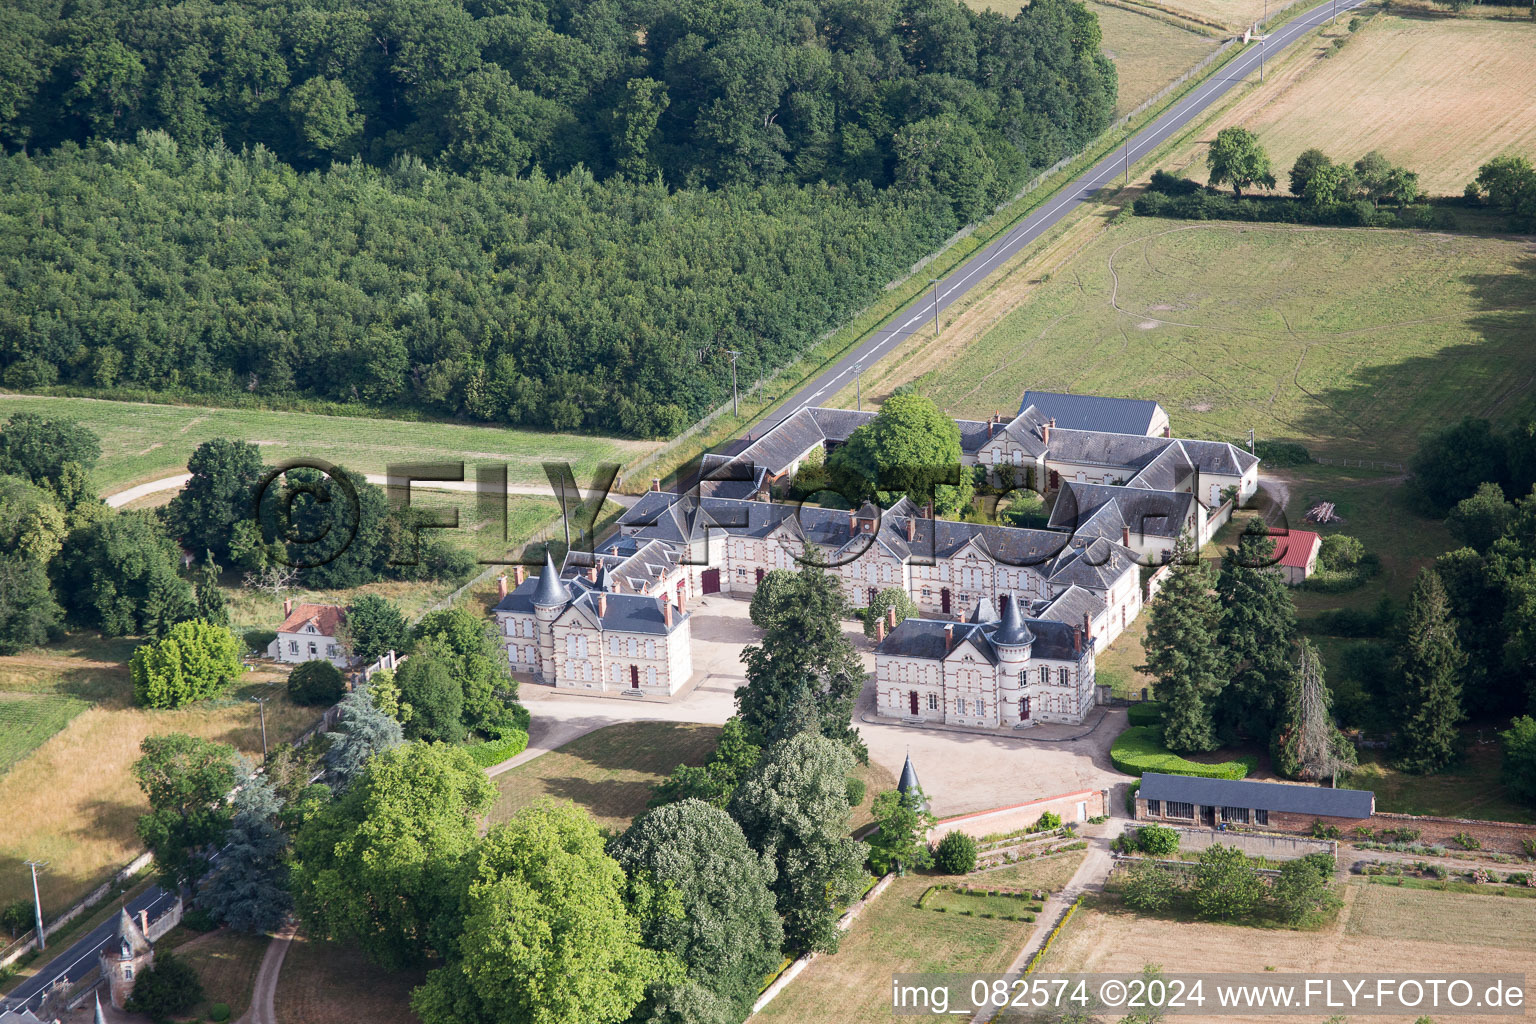 Luftaufnahme von Château de Combreux im Bundesland Loiret, Frankreich